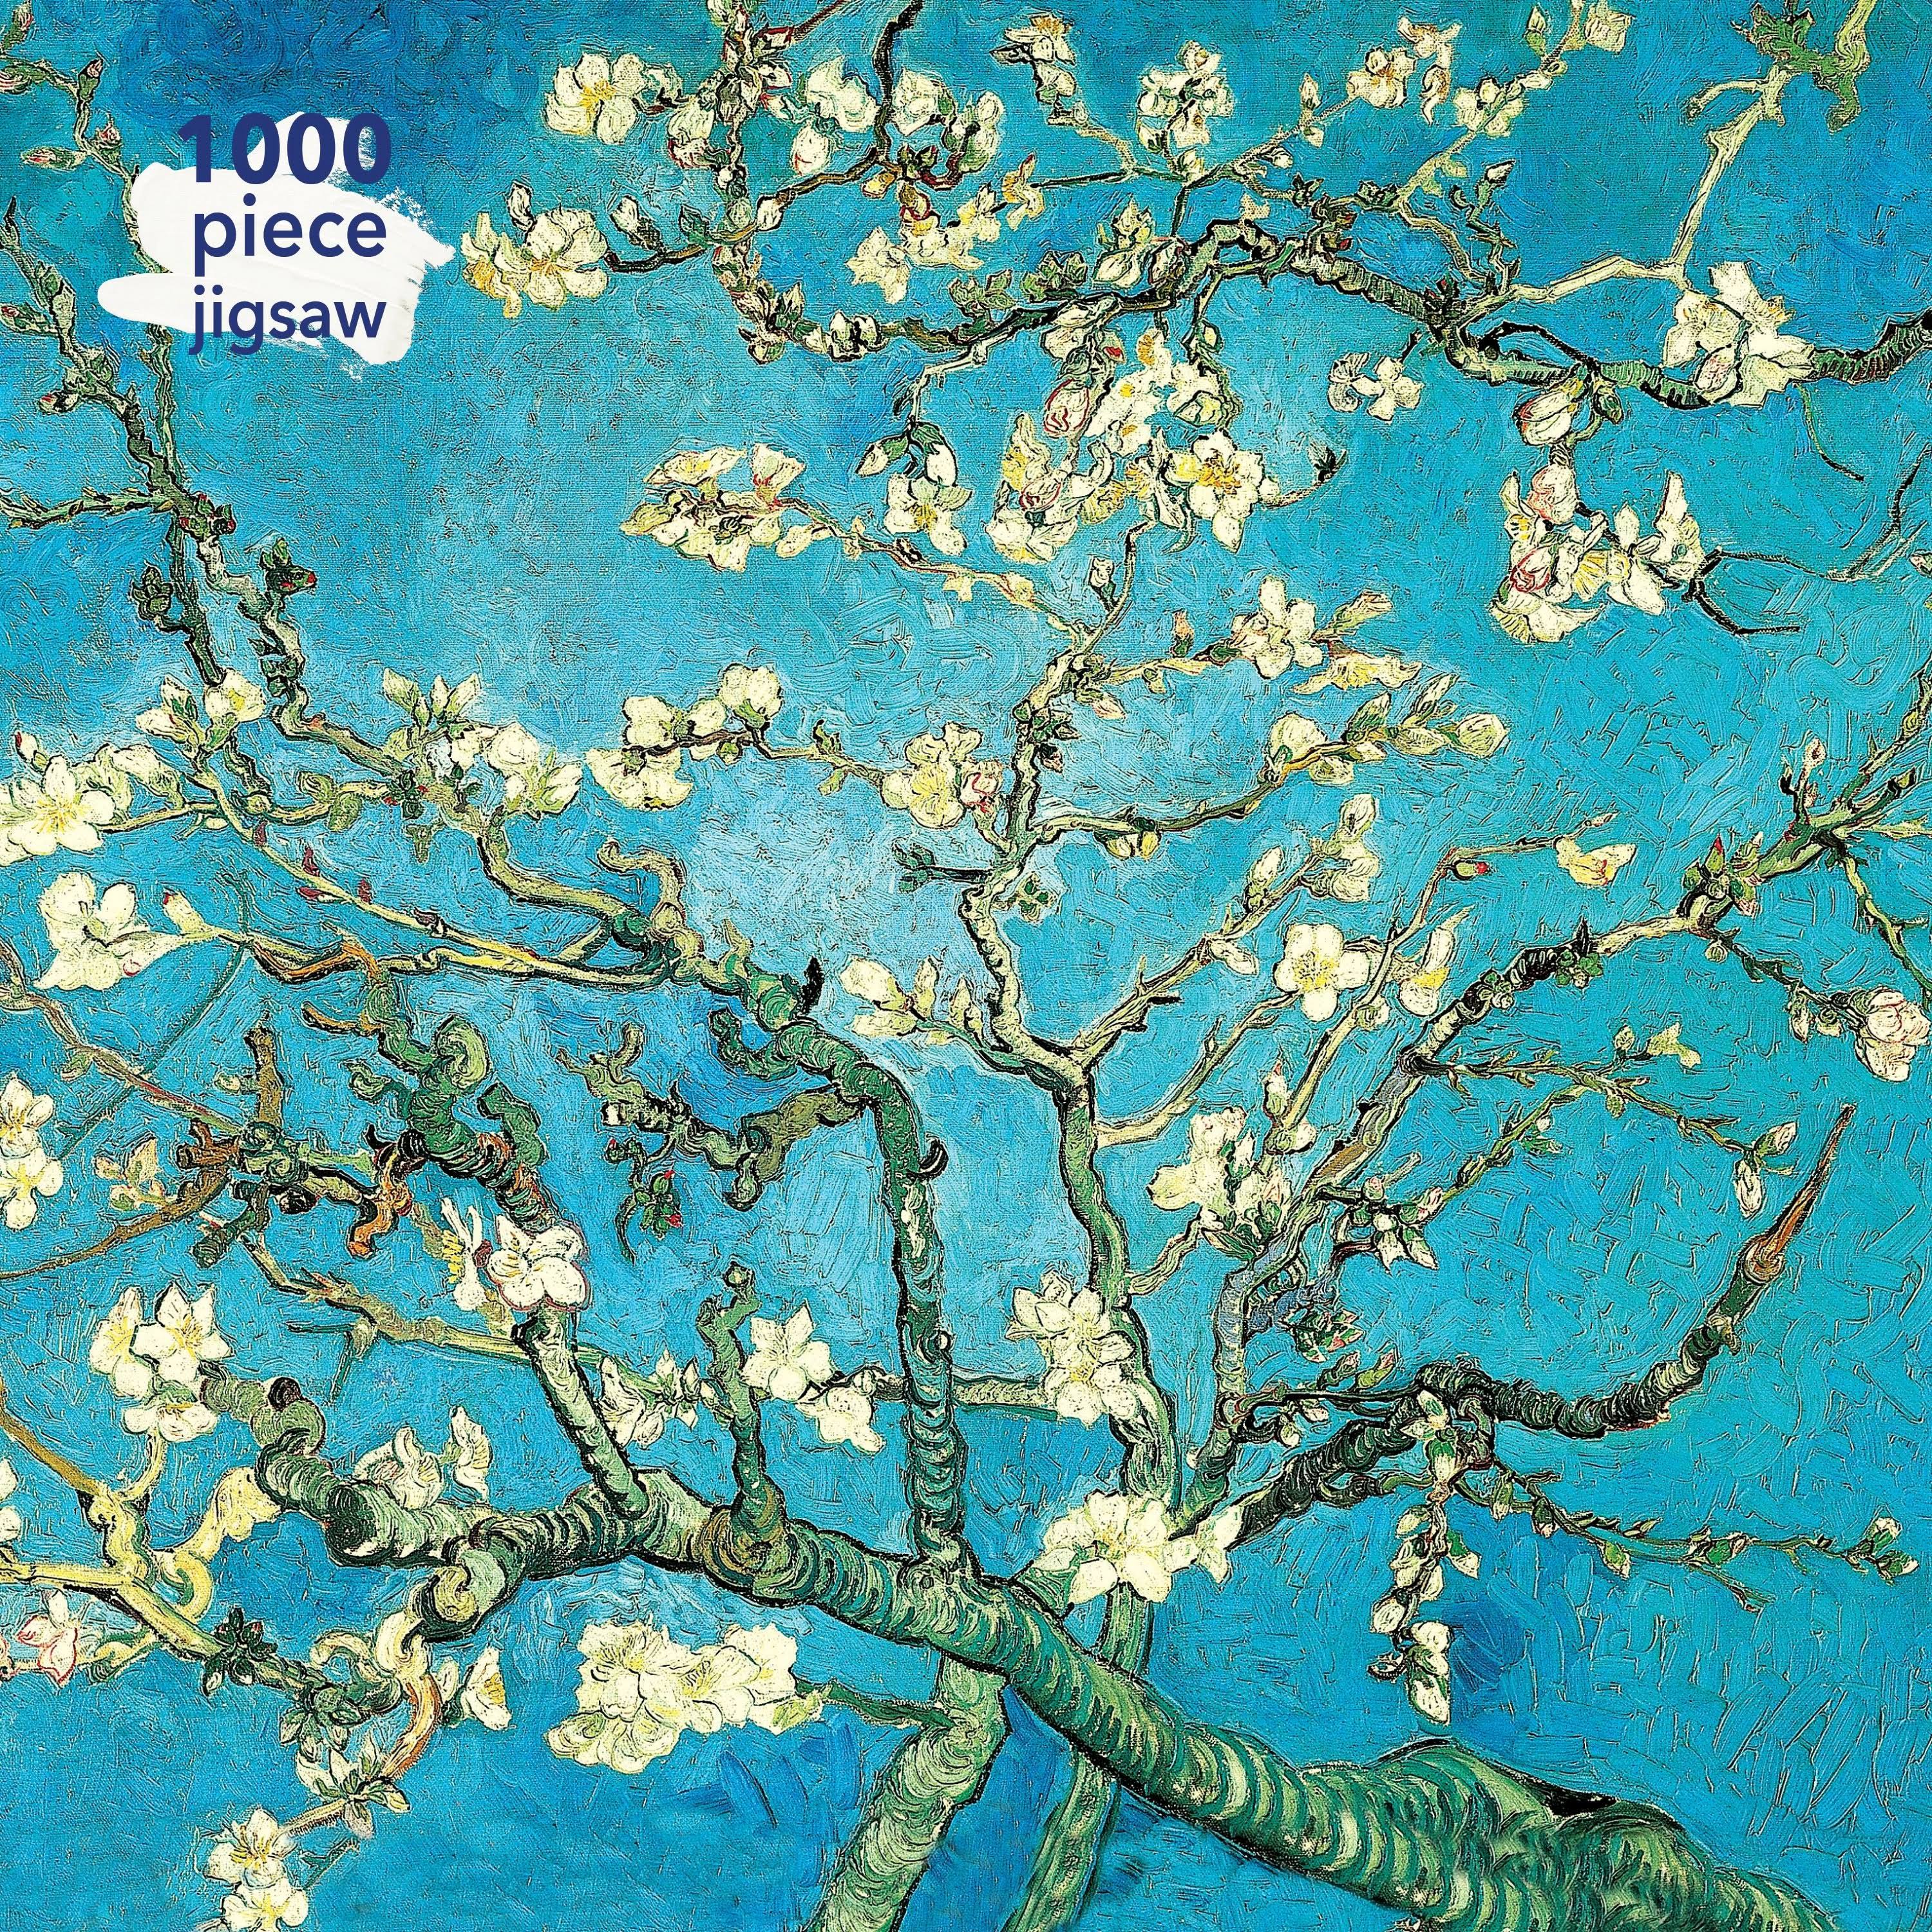 Adult Jigsaw Puzzle Vincent van Gogh: Almond Blossom: 1000-Piece Jigsaw Puzzles